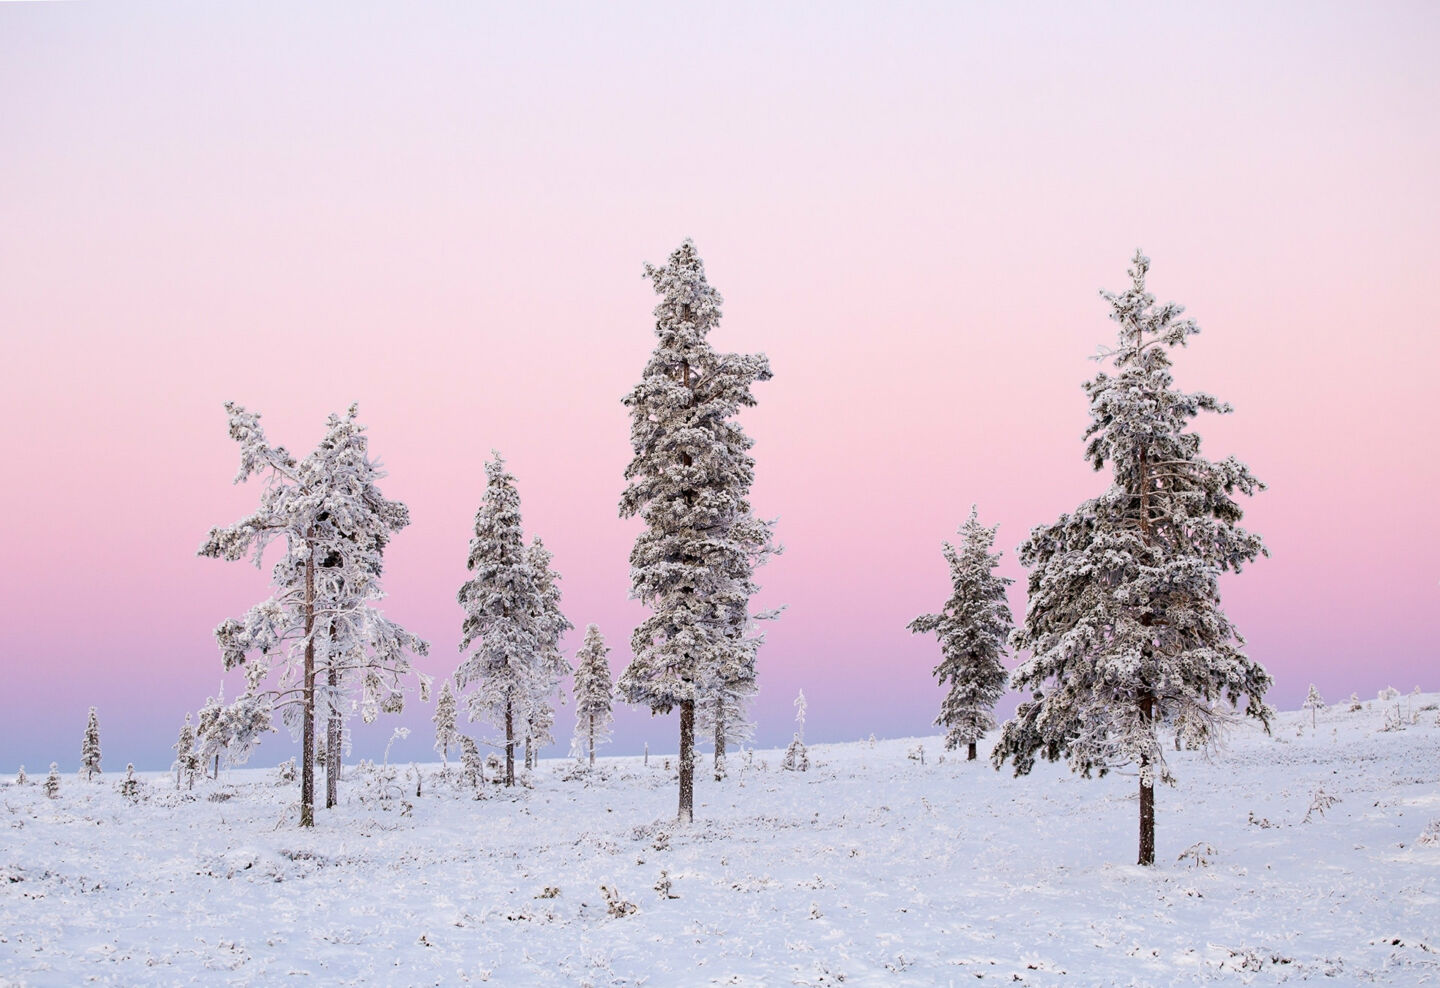 Filming Finnish Lapland in polar night